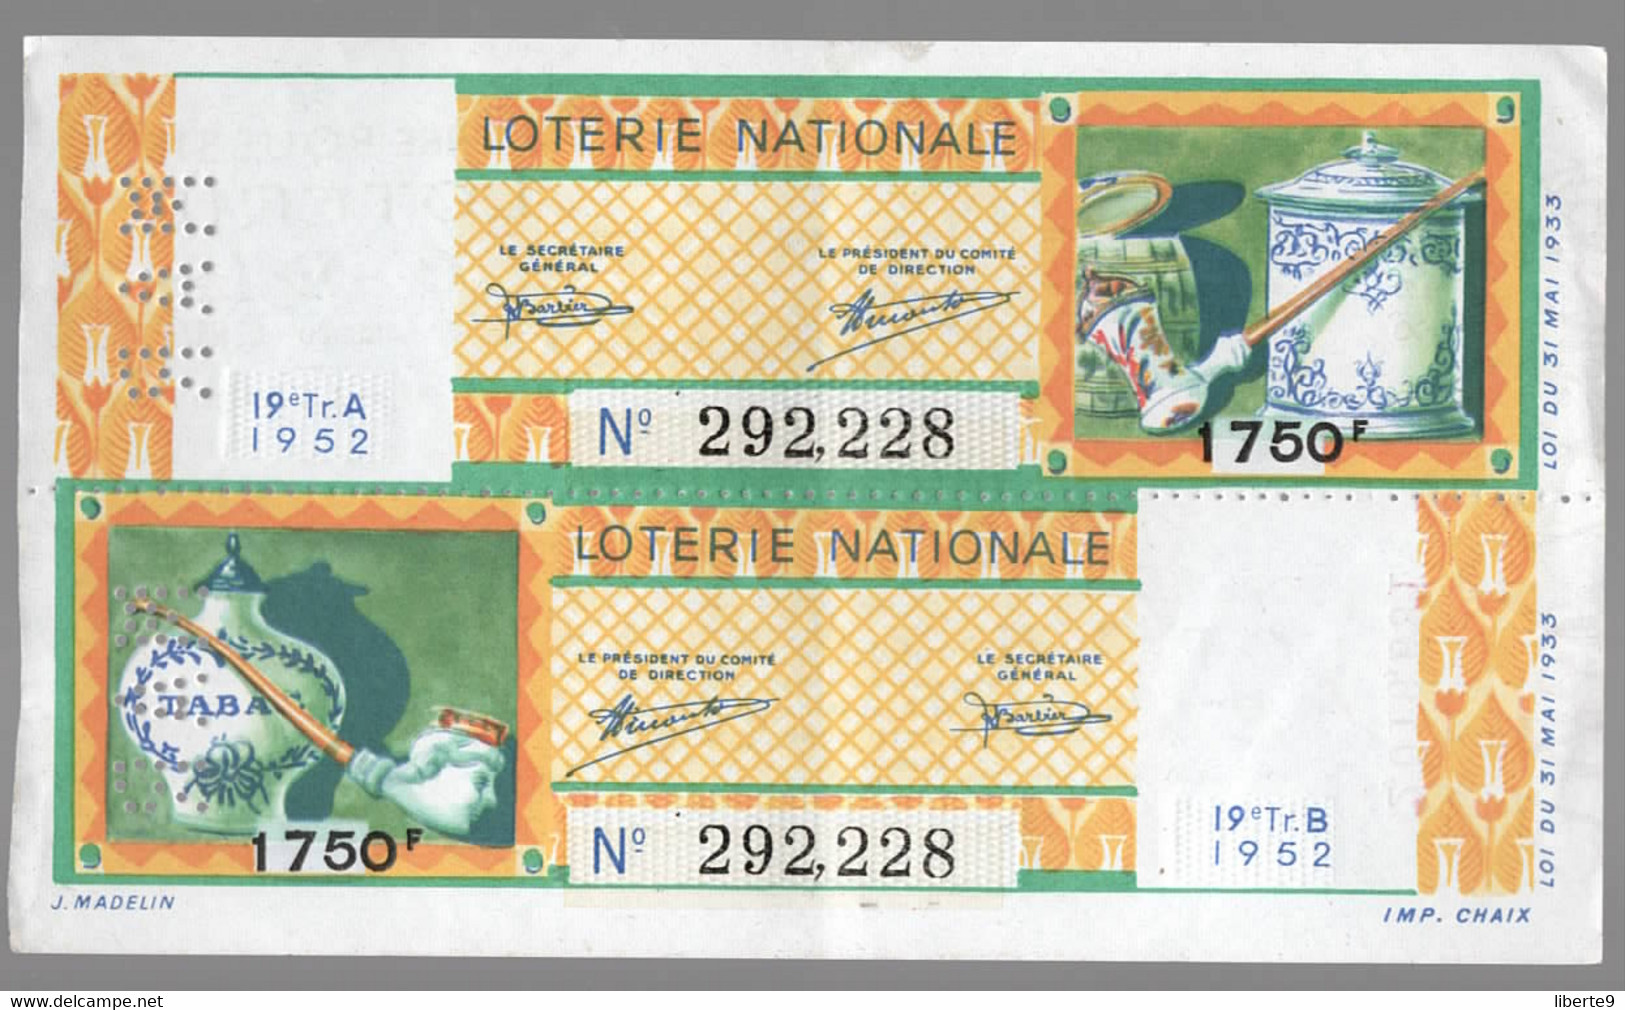 LOTERIE NATIONALE 1952 Tabac Pipe  VENDUE EN ALGERIE - Lotterielose